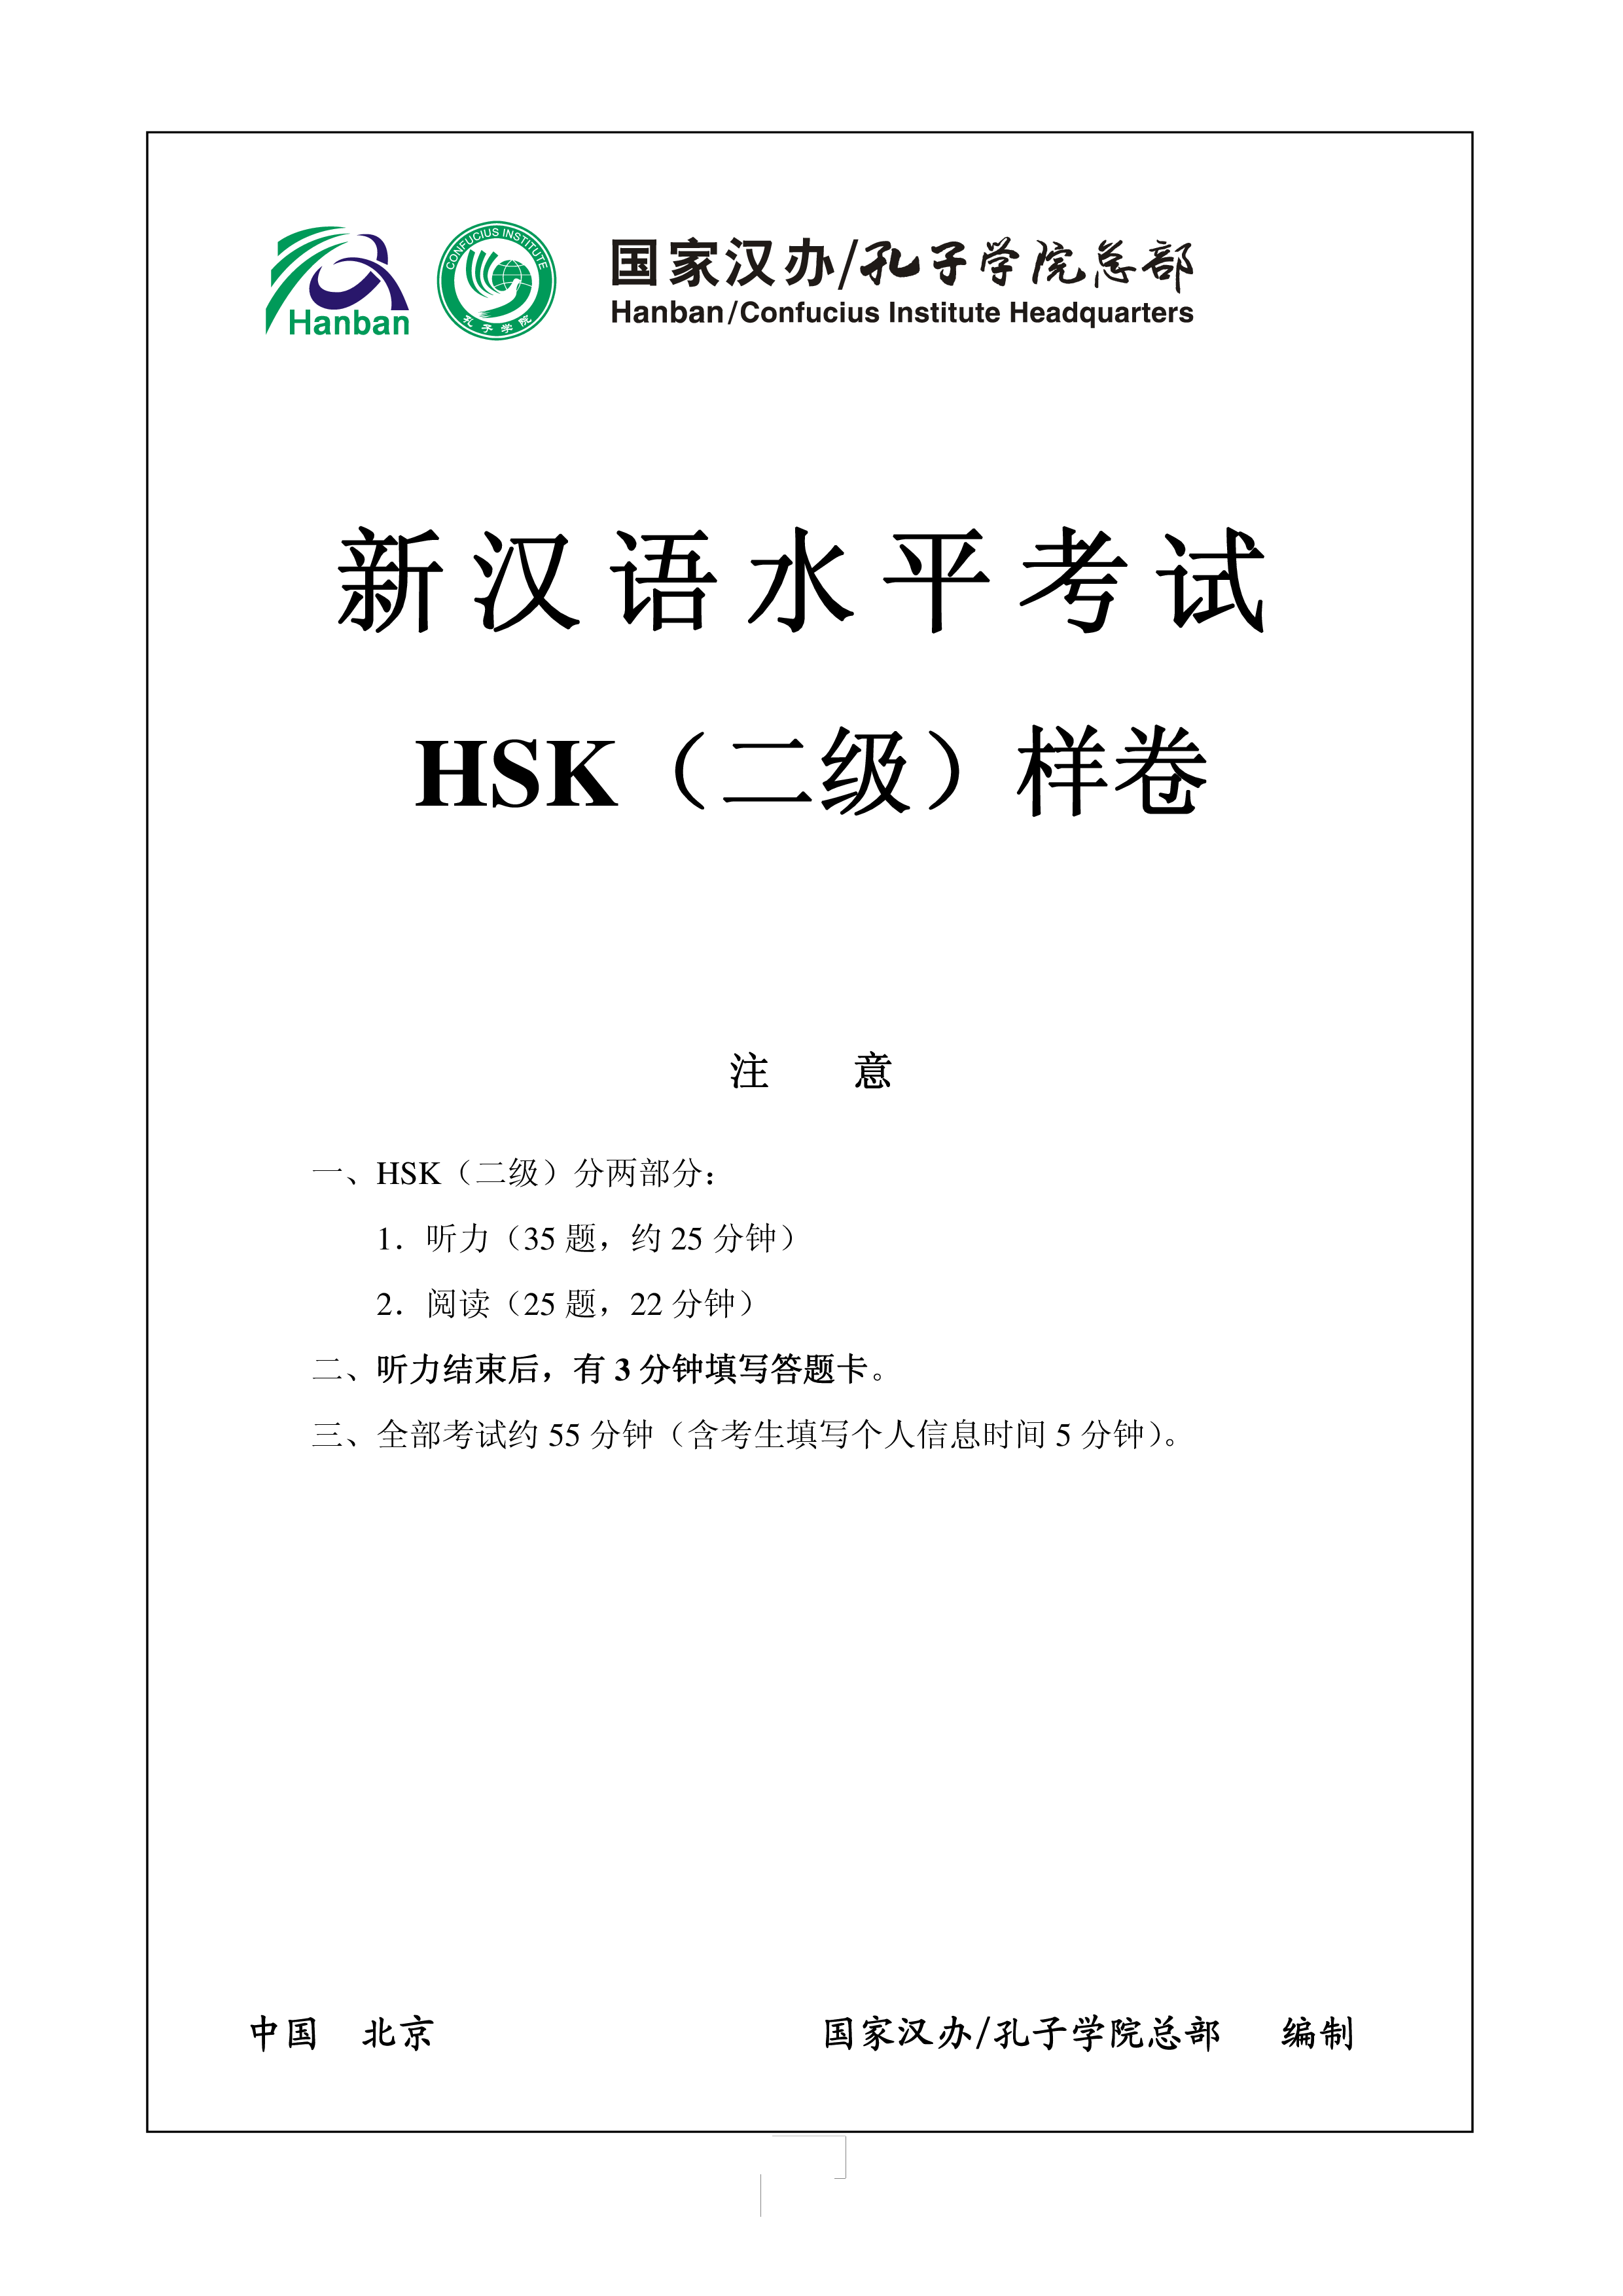 hsk2 chinese exam including answers # hsk2 2-1 plantilla imagen principal